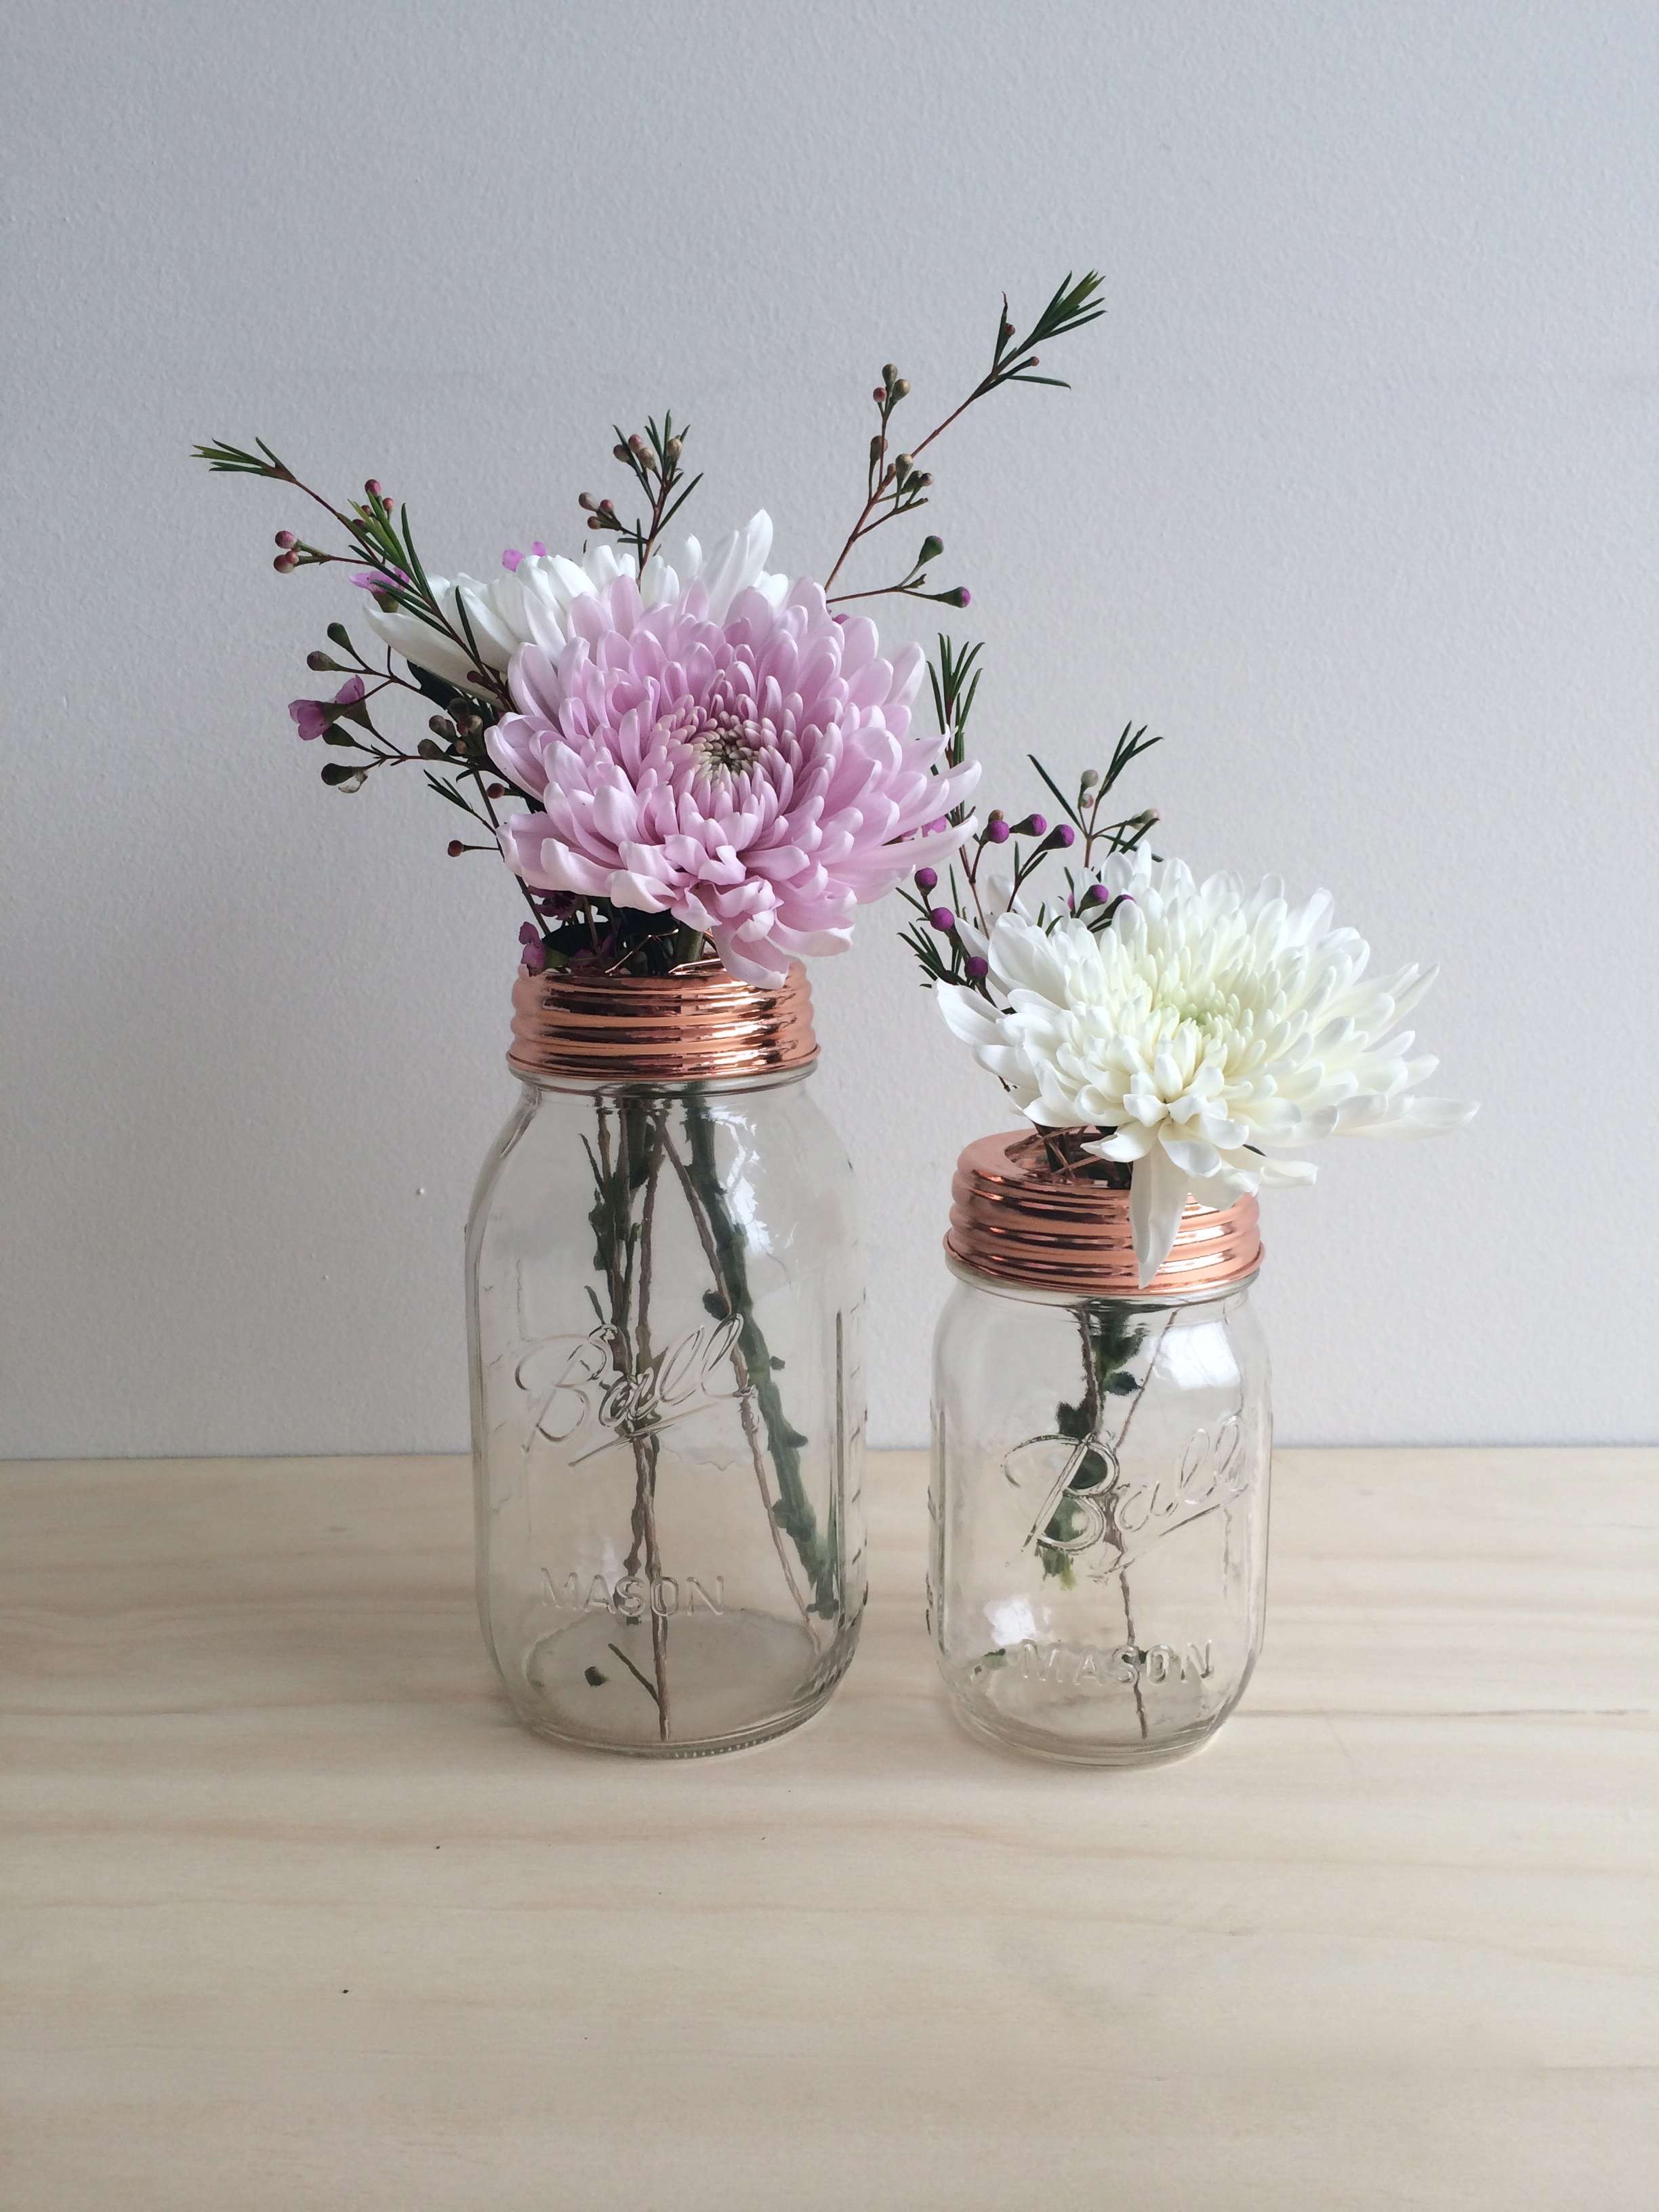 The flower jar photo